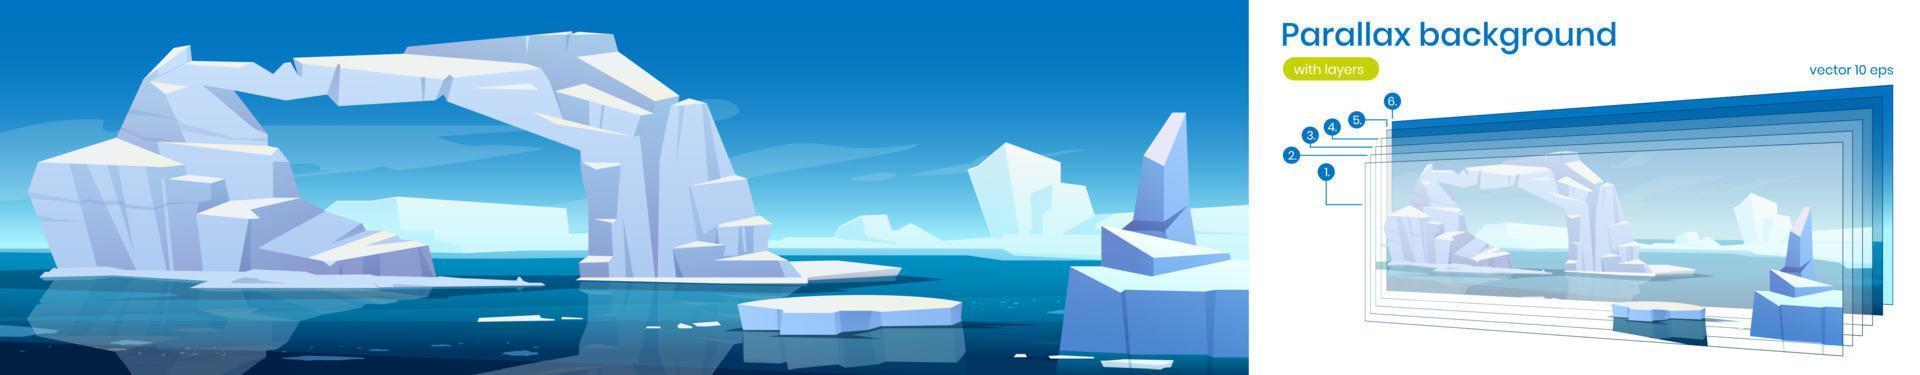 fondo de paralaje paisaje ártico 2d, iceberg vector